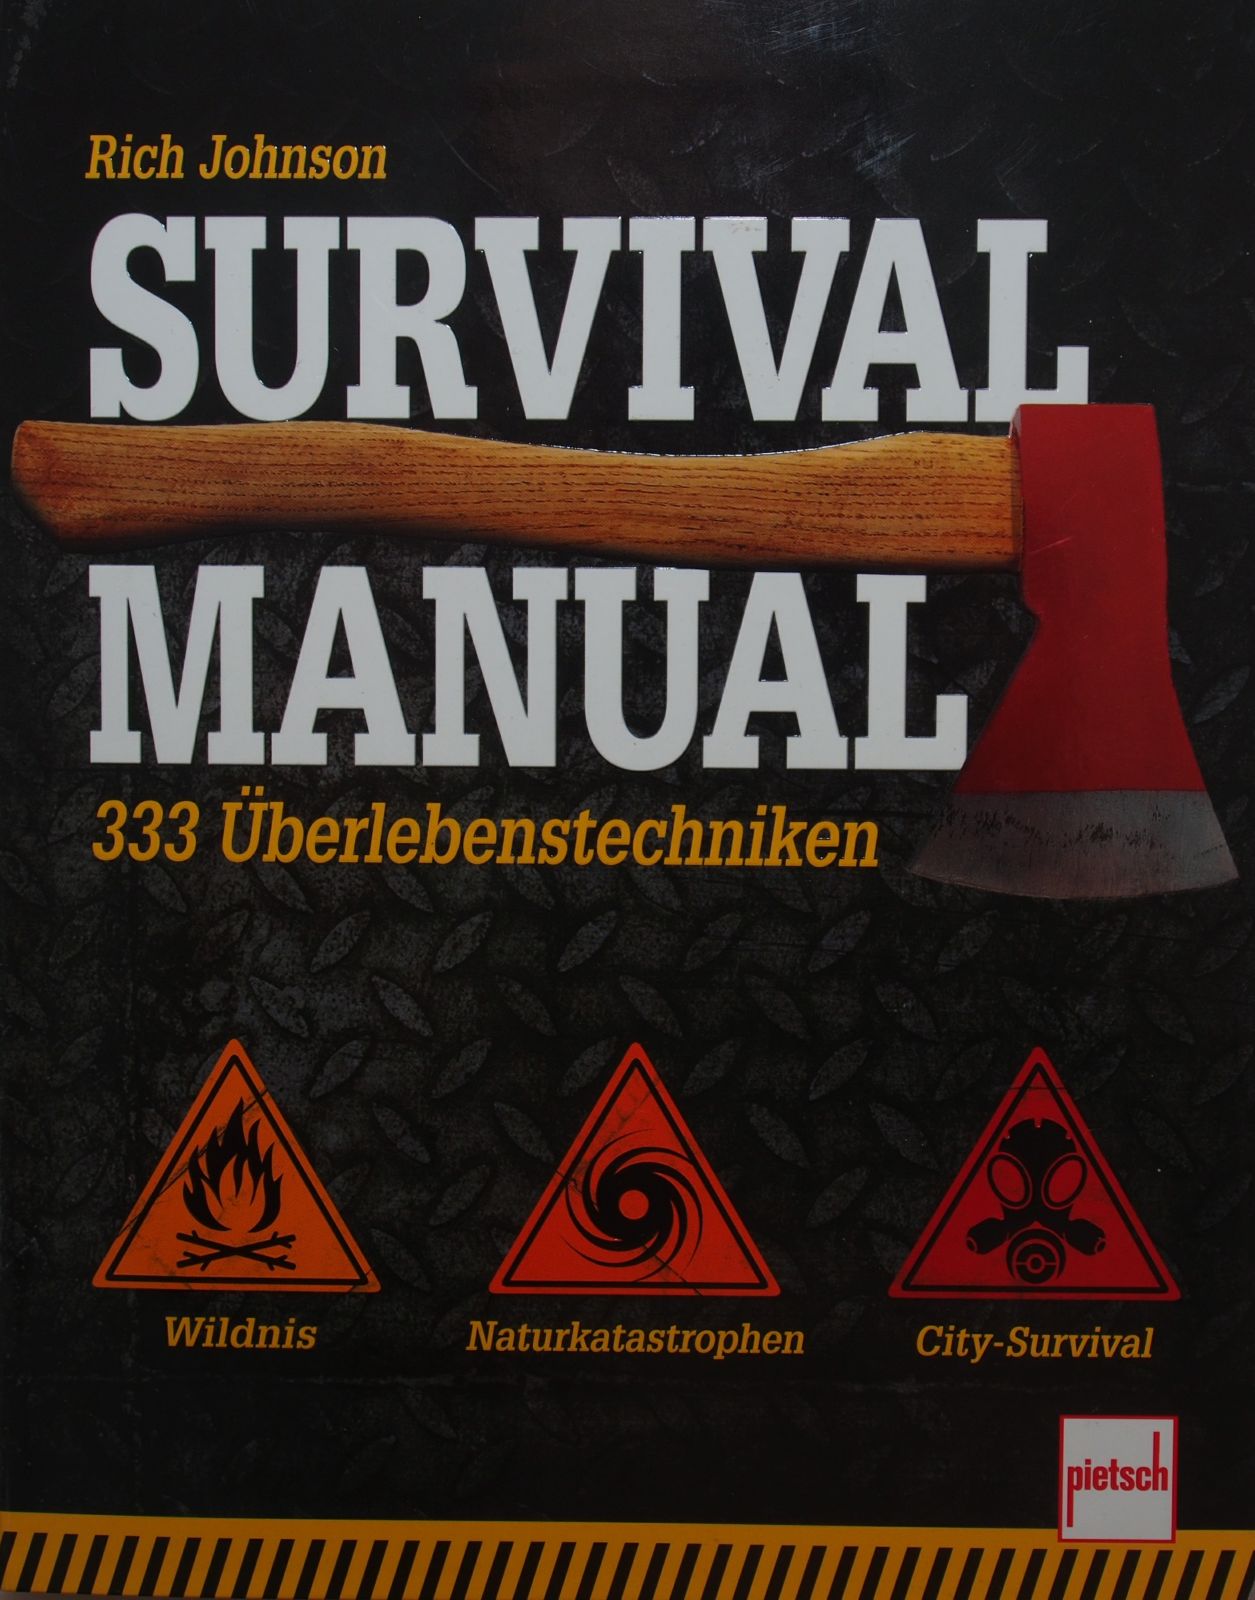 Rich Johnson-Survival Manual